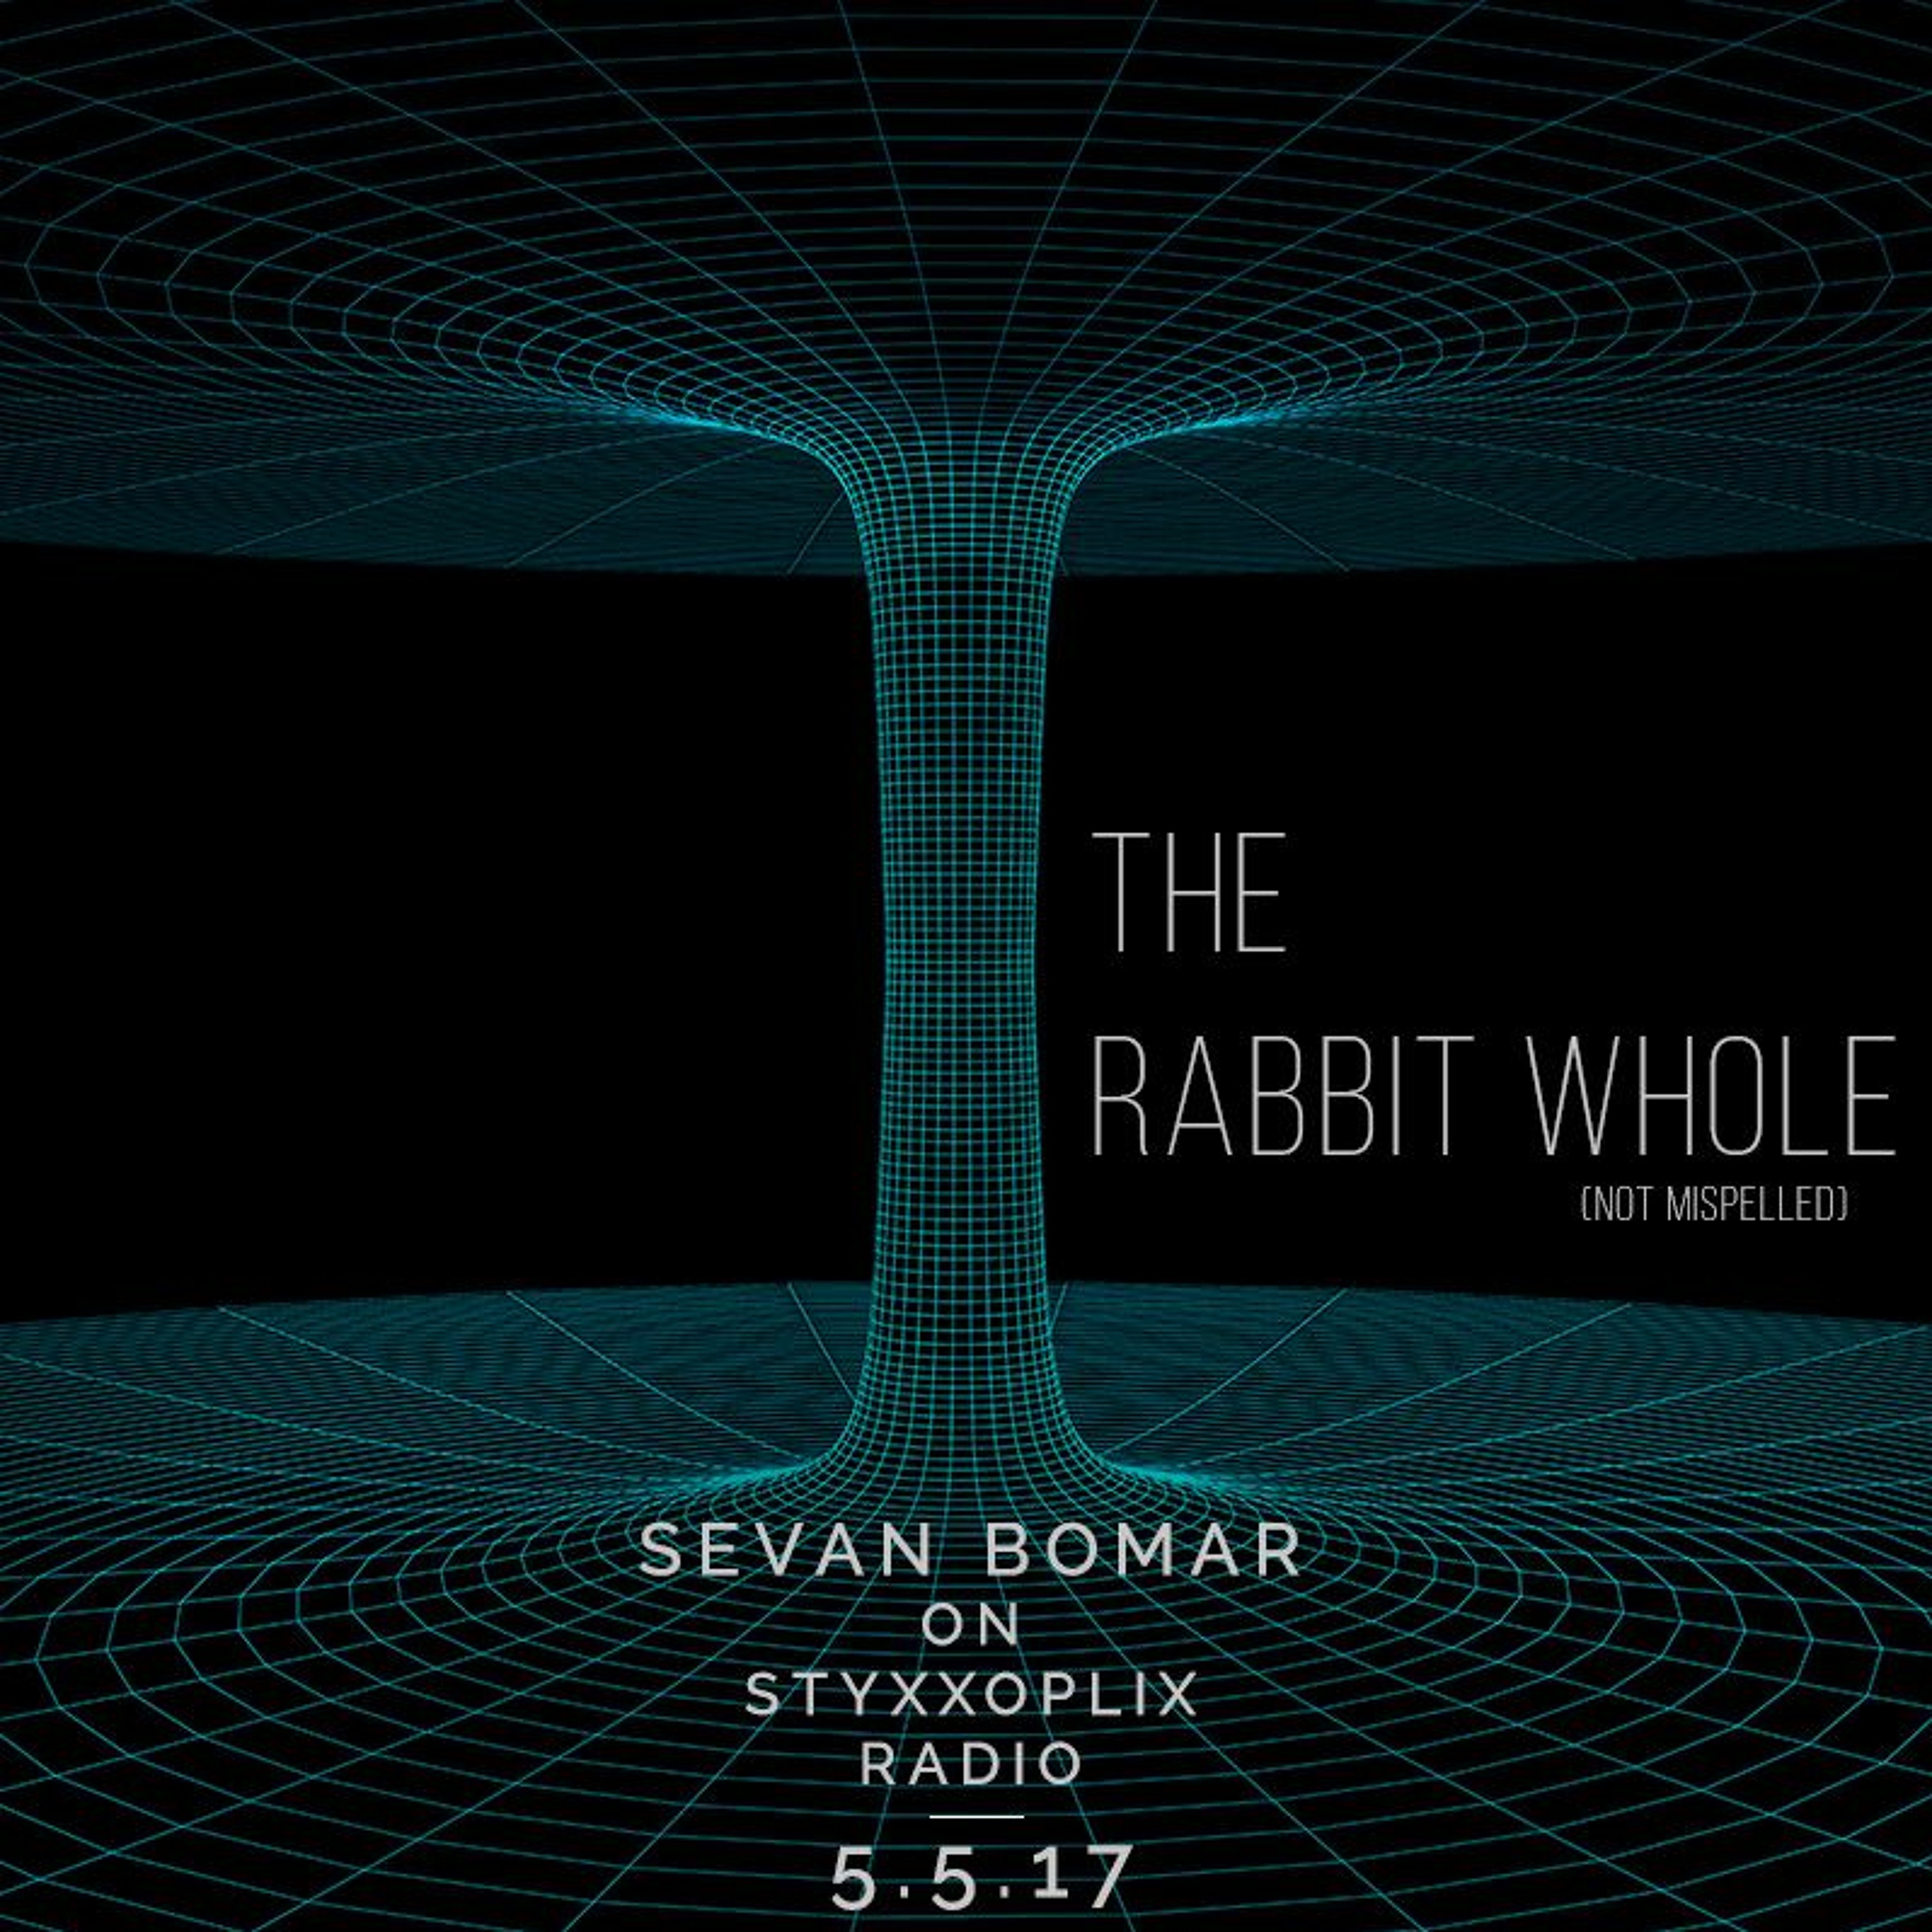 THE RABBIT WHOLE - SEVAN ON STYXXOPLIX RADIO - 5-5-2017